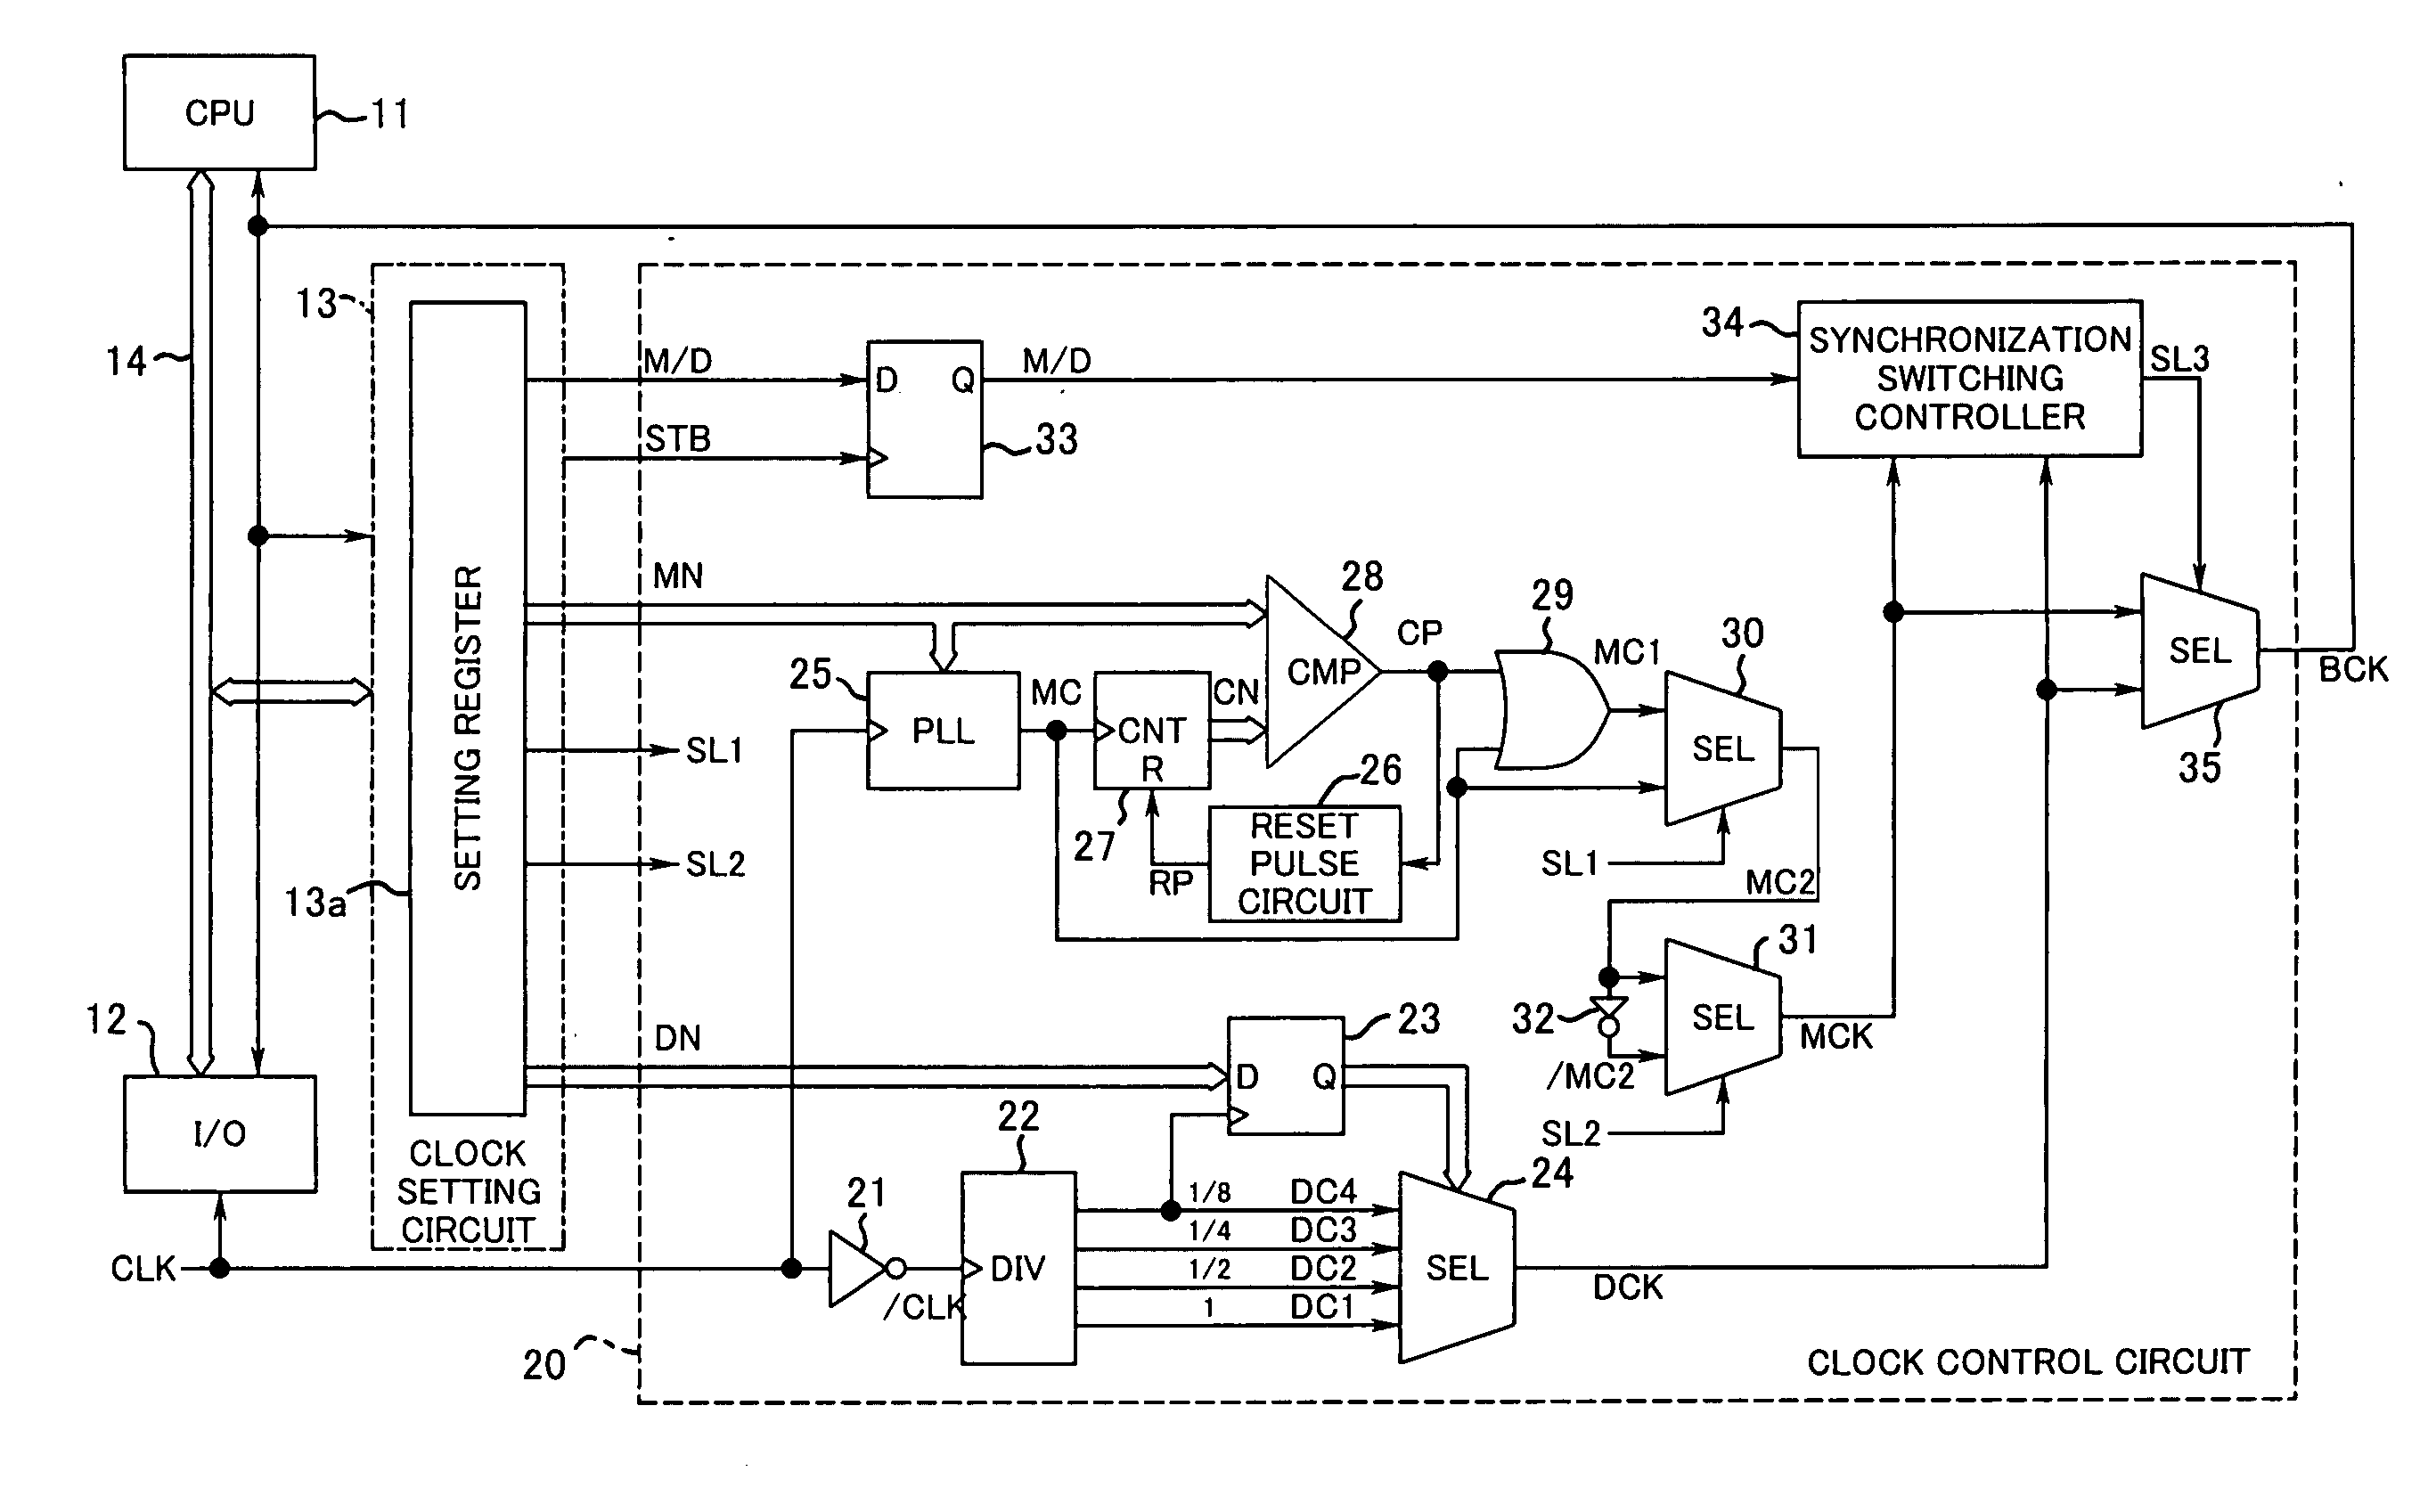 Clock control circuit